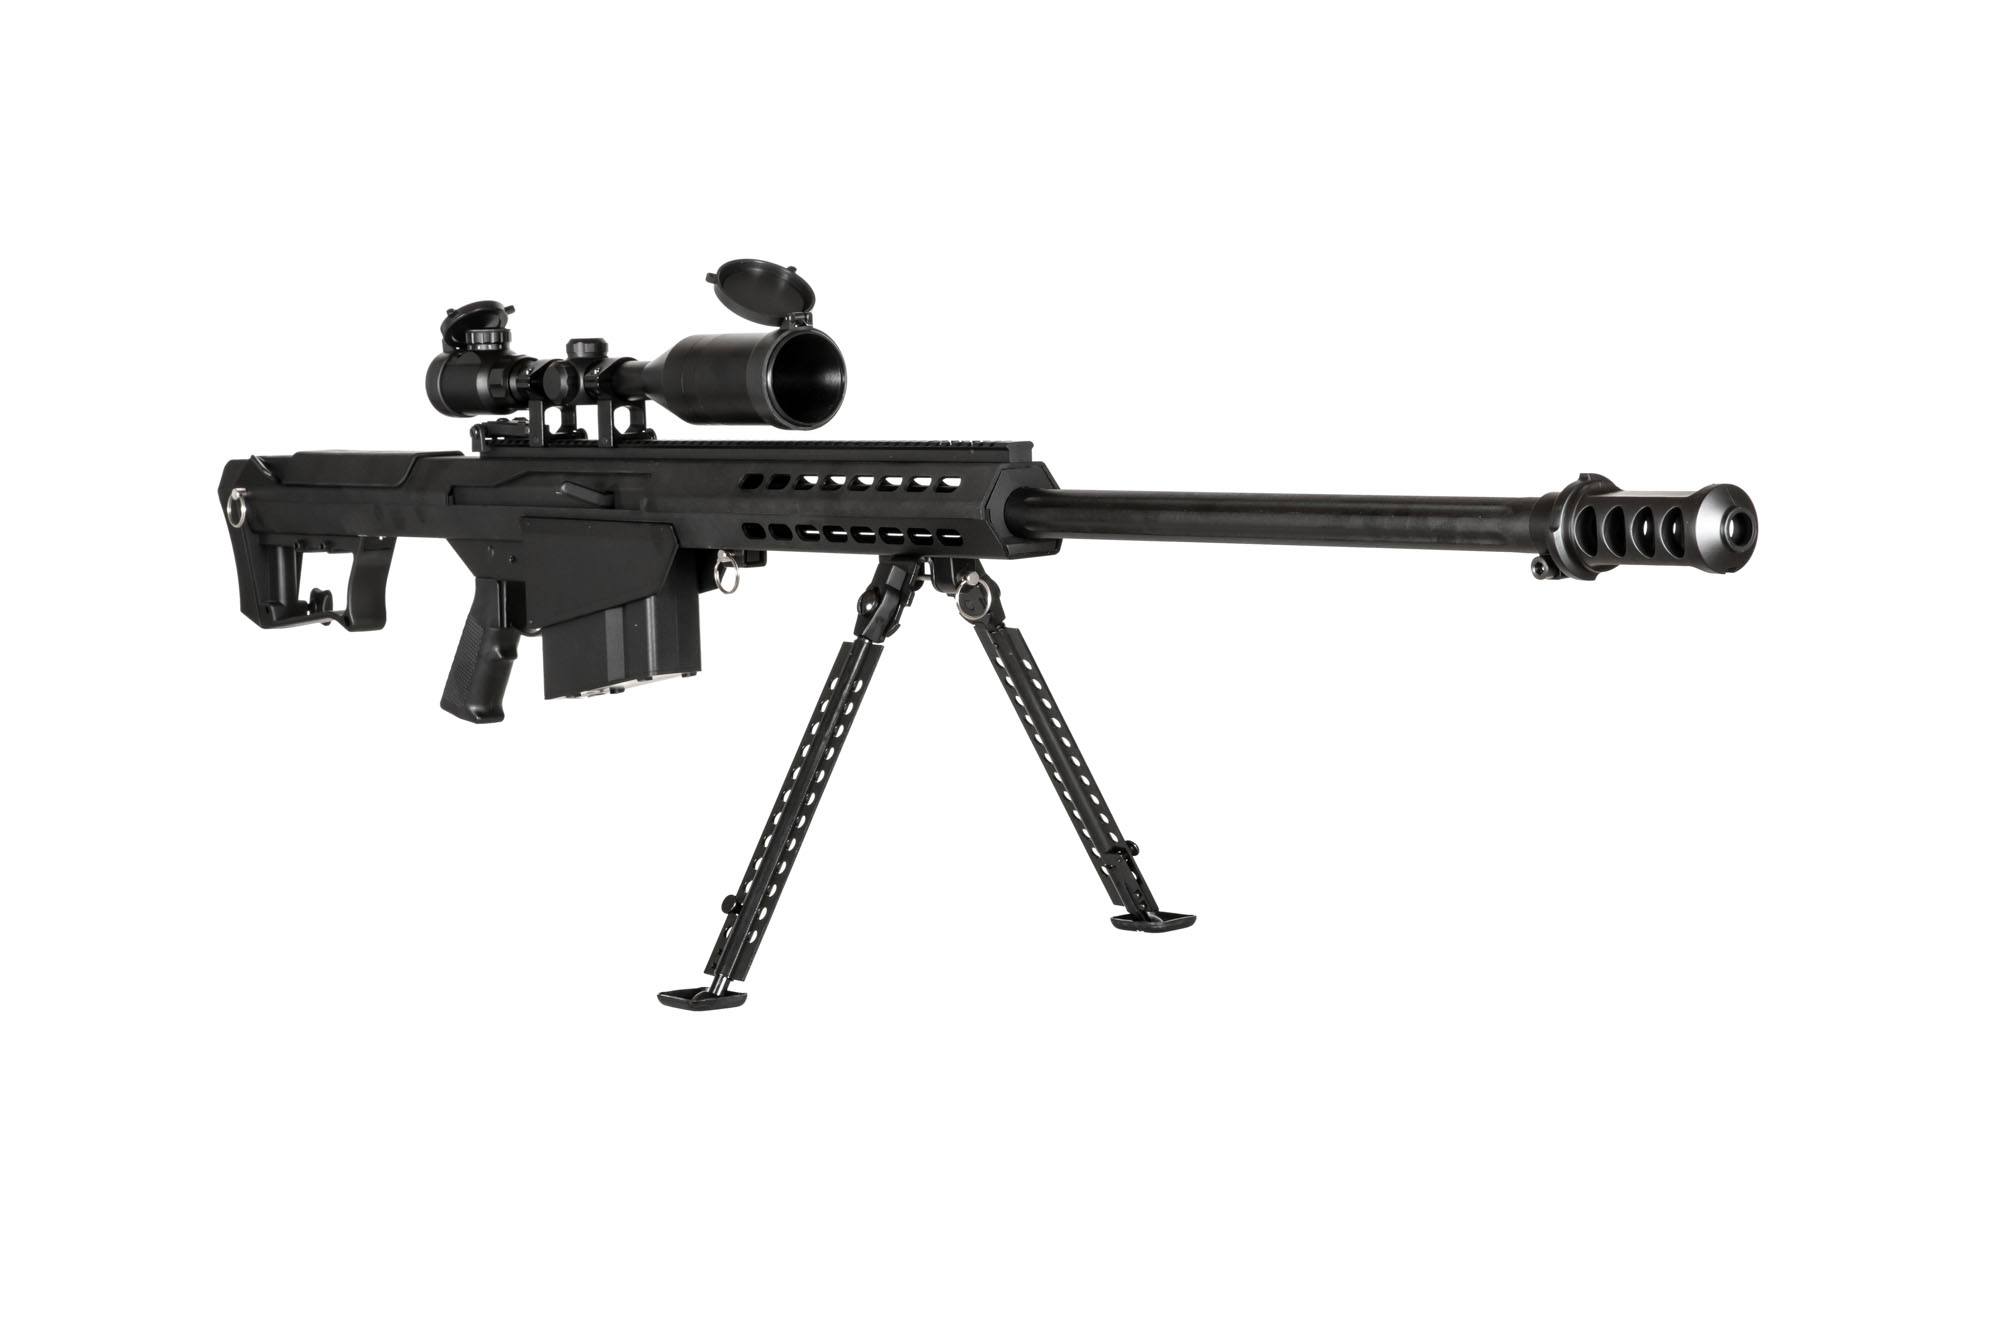 Barrett M82 sniper with bipod and scope (SW-024S) Black